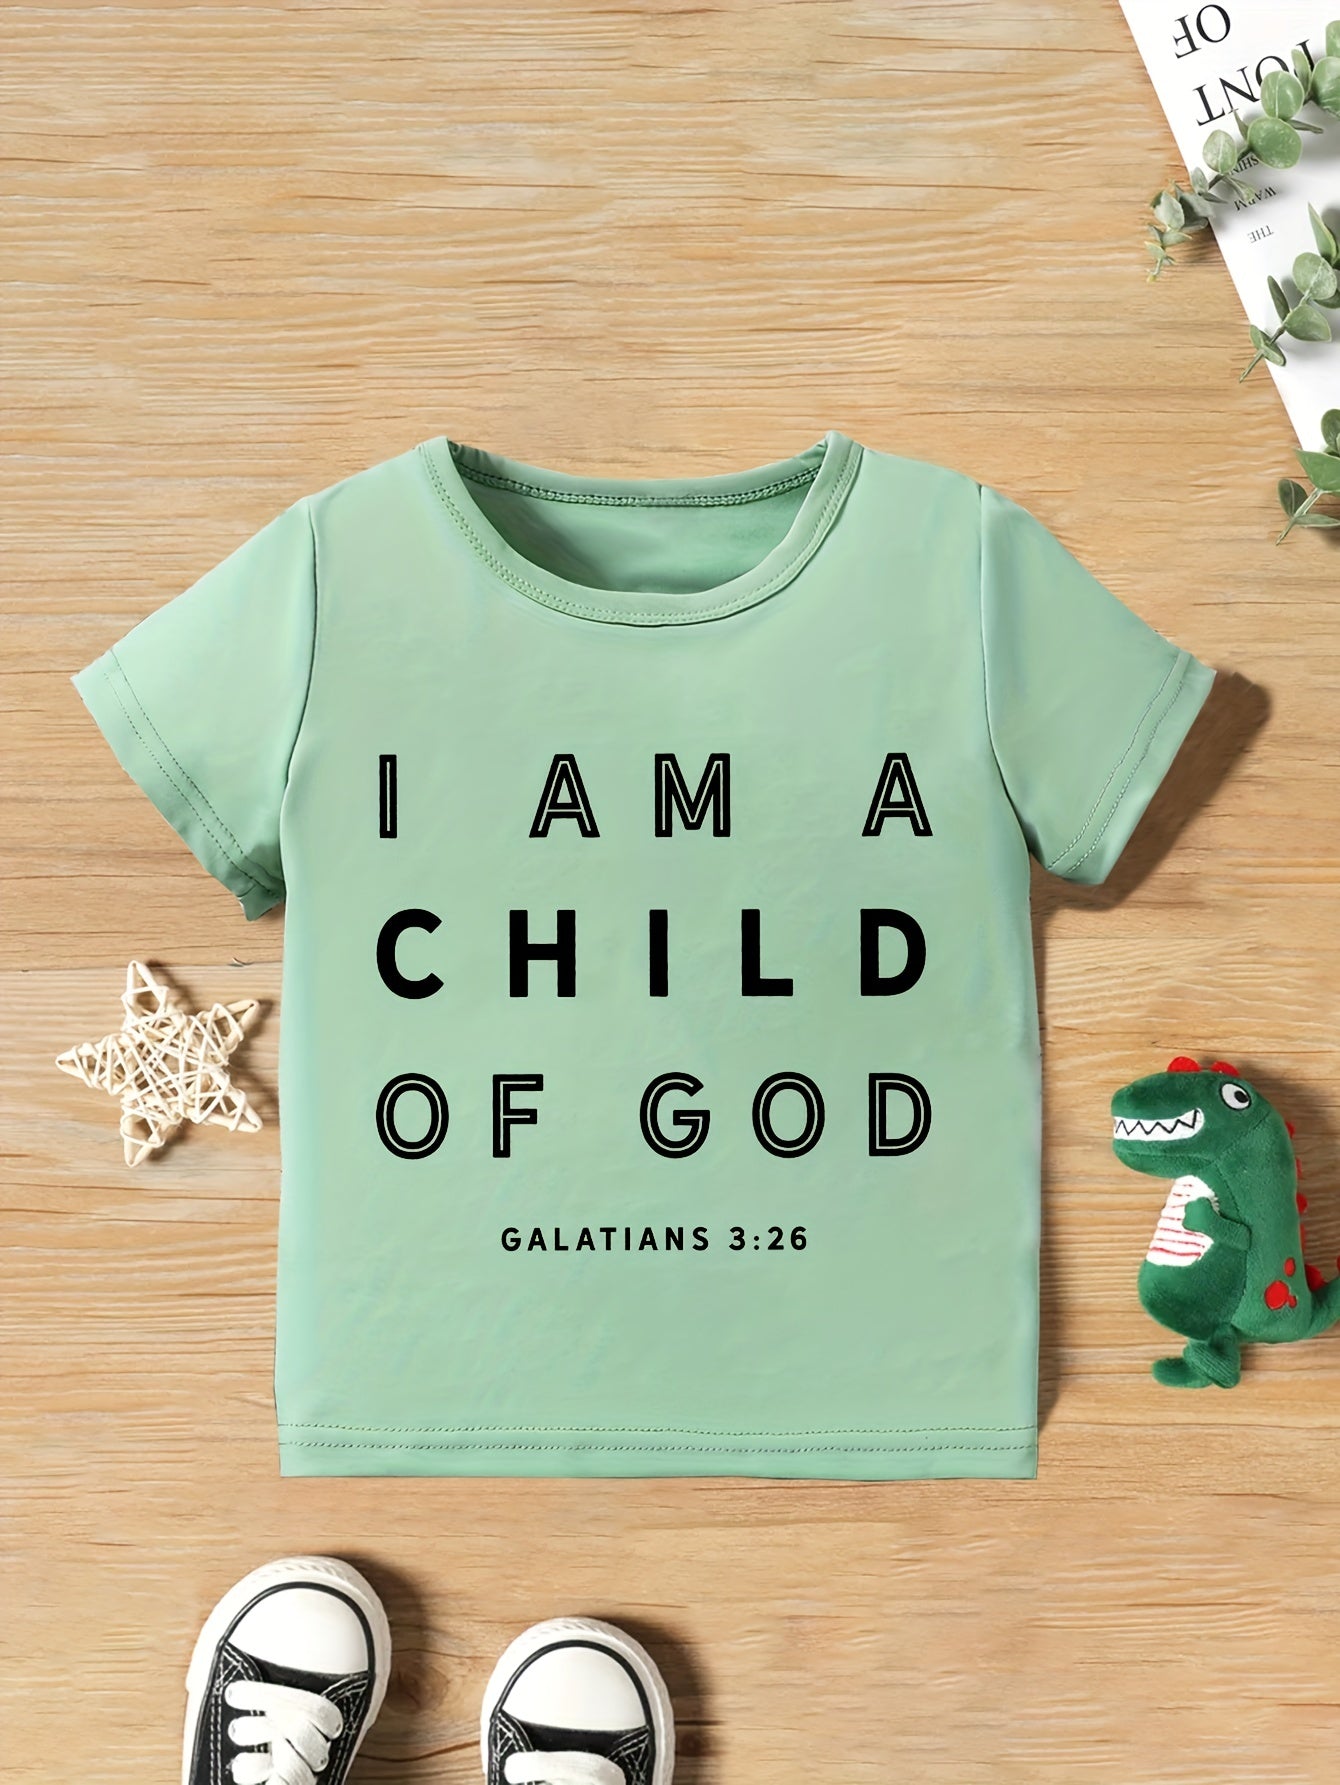 I'M A CHILD OF GOD Youth Christian T-shirt claimedbygoddesigns